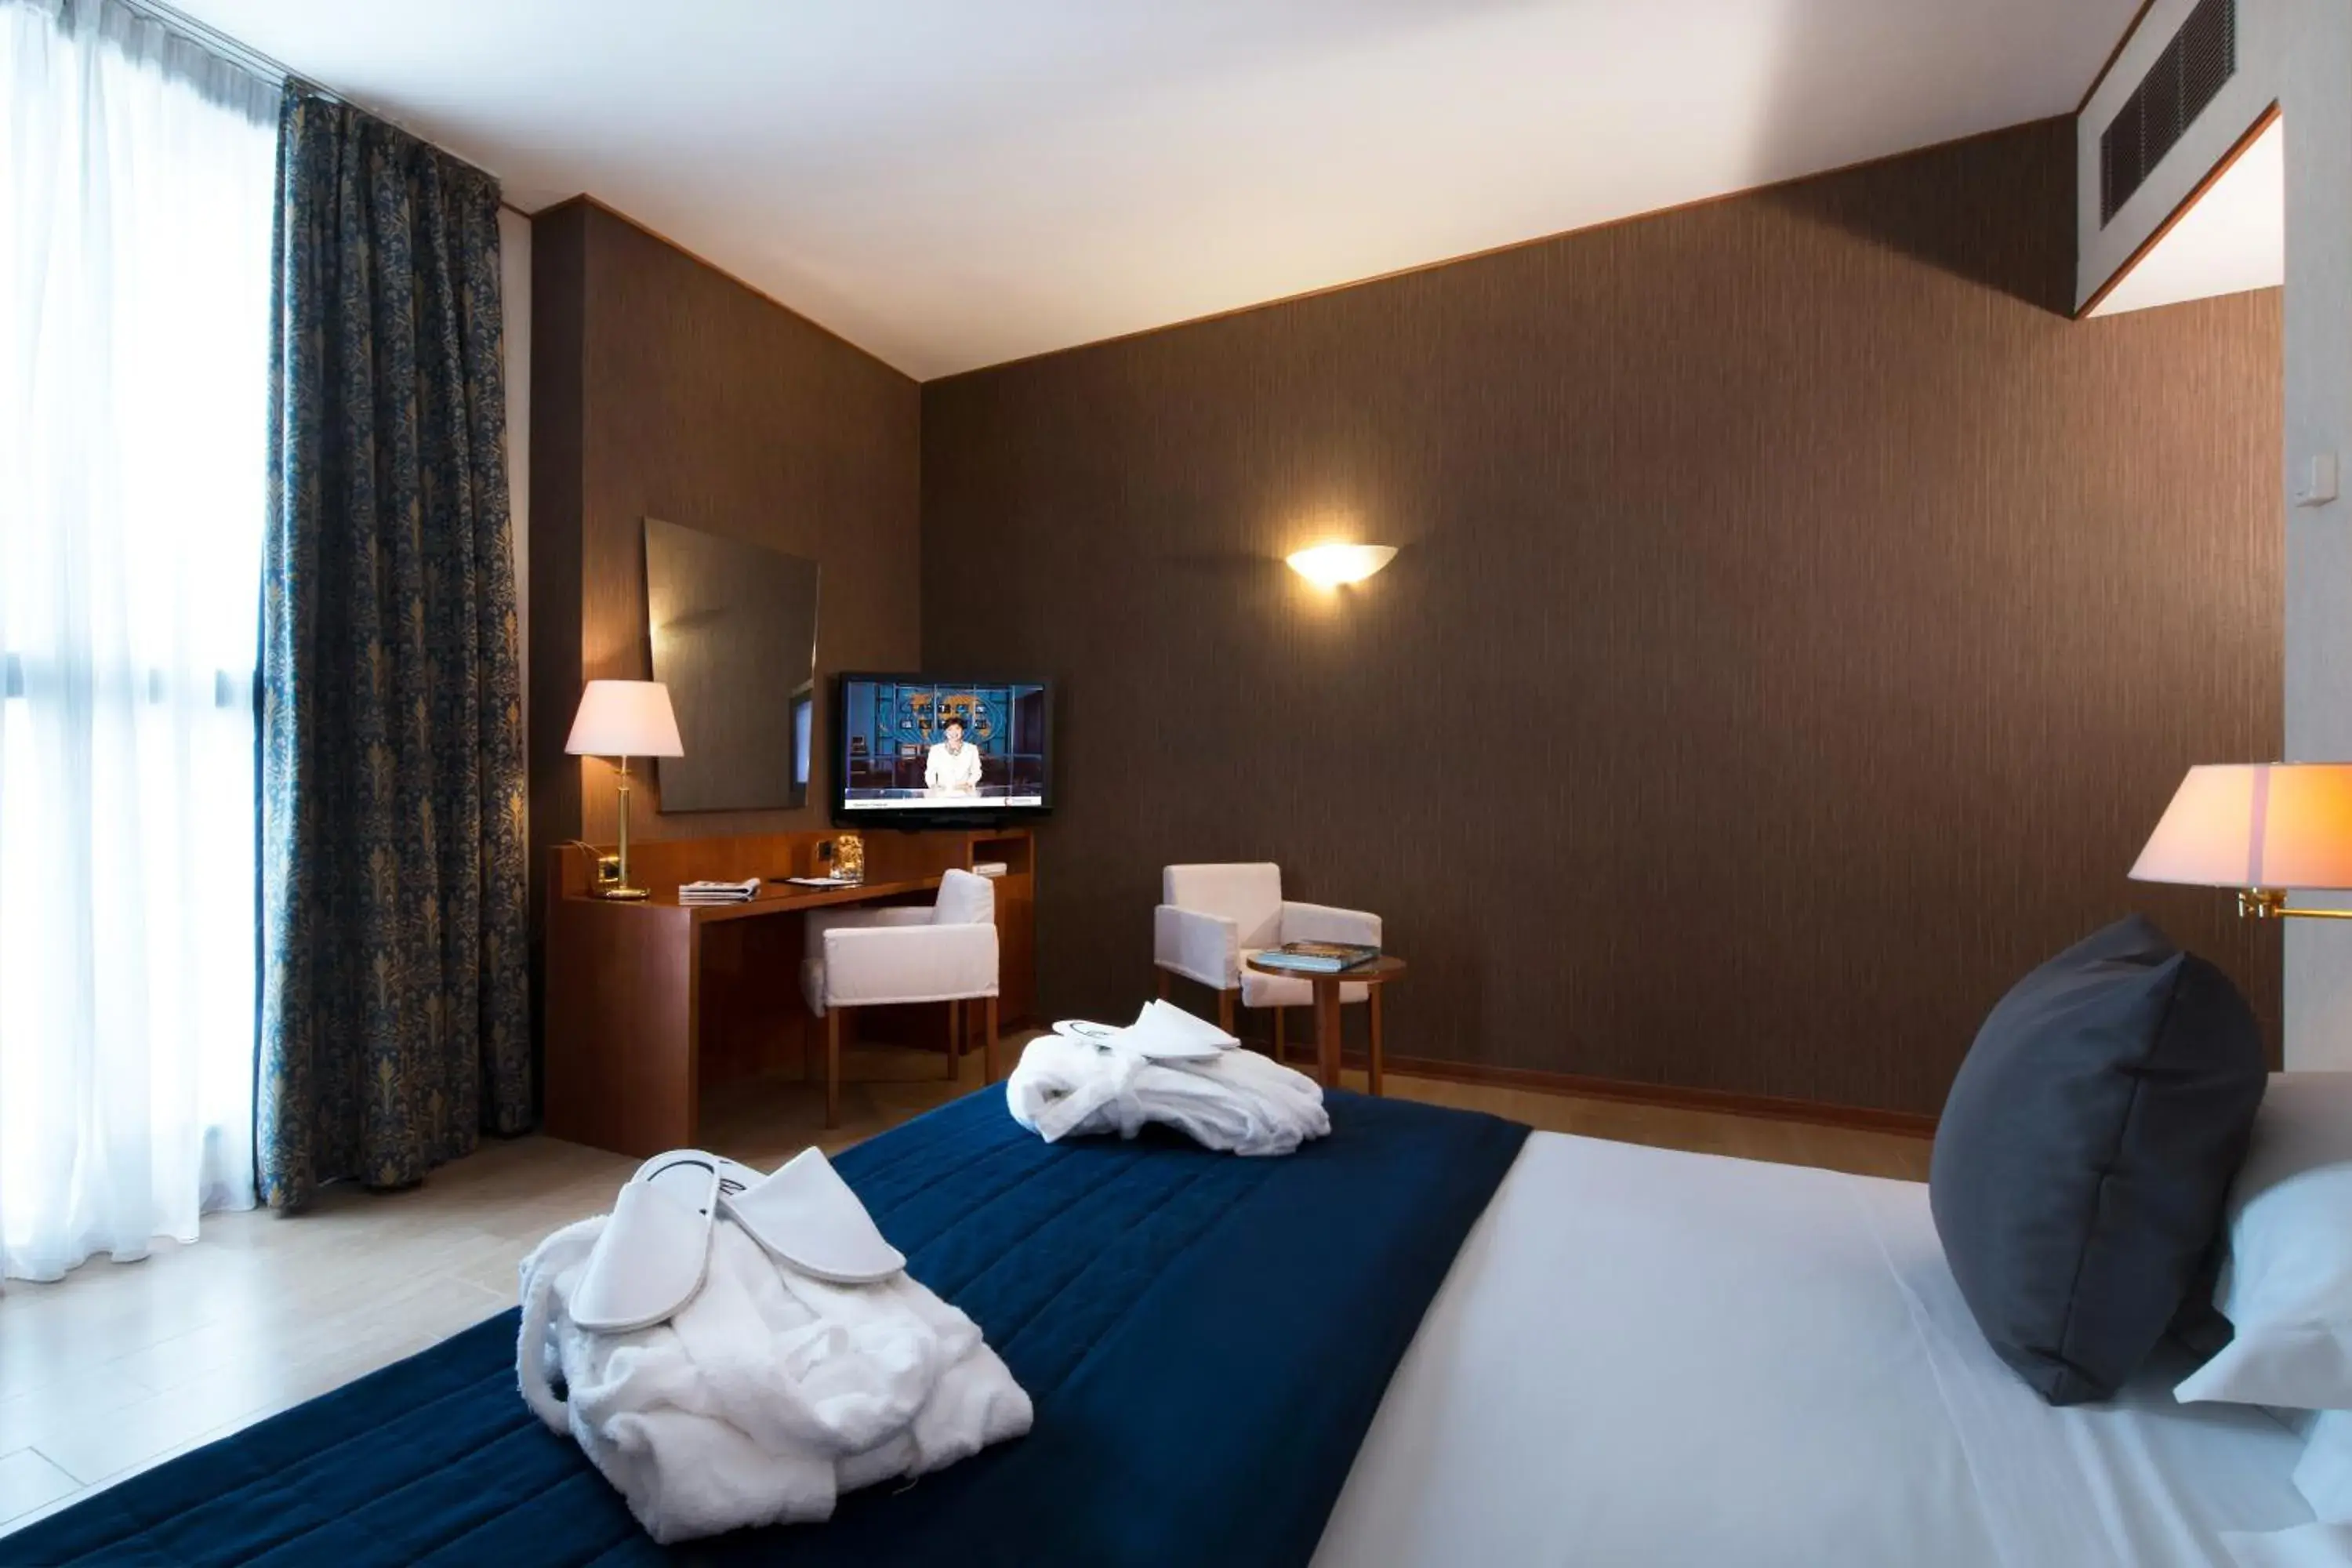 Bedroom, TV/Entertainment Center in Cdh Hotel Parma & Congressi